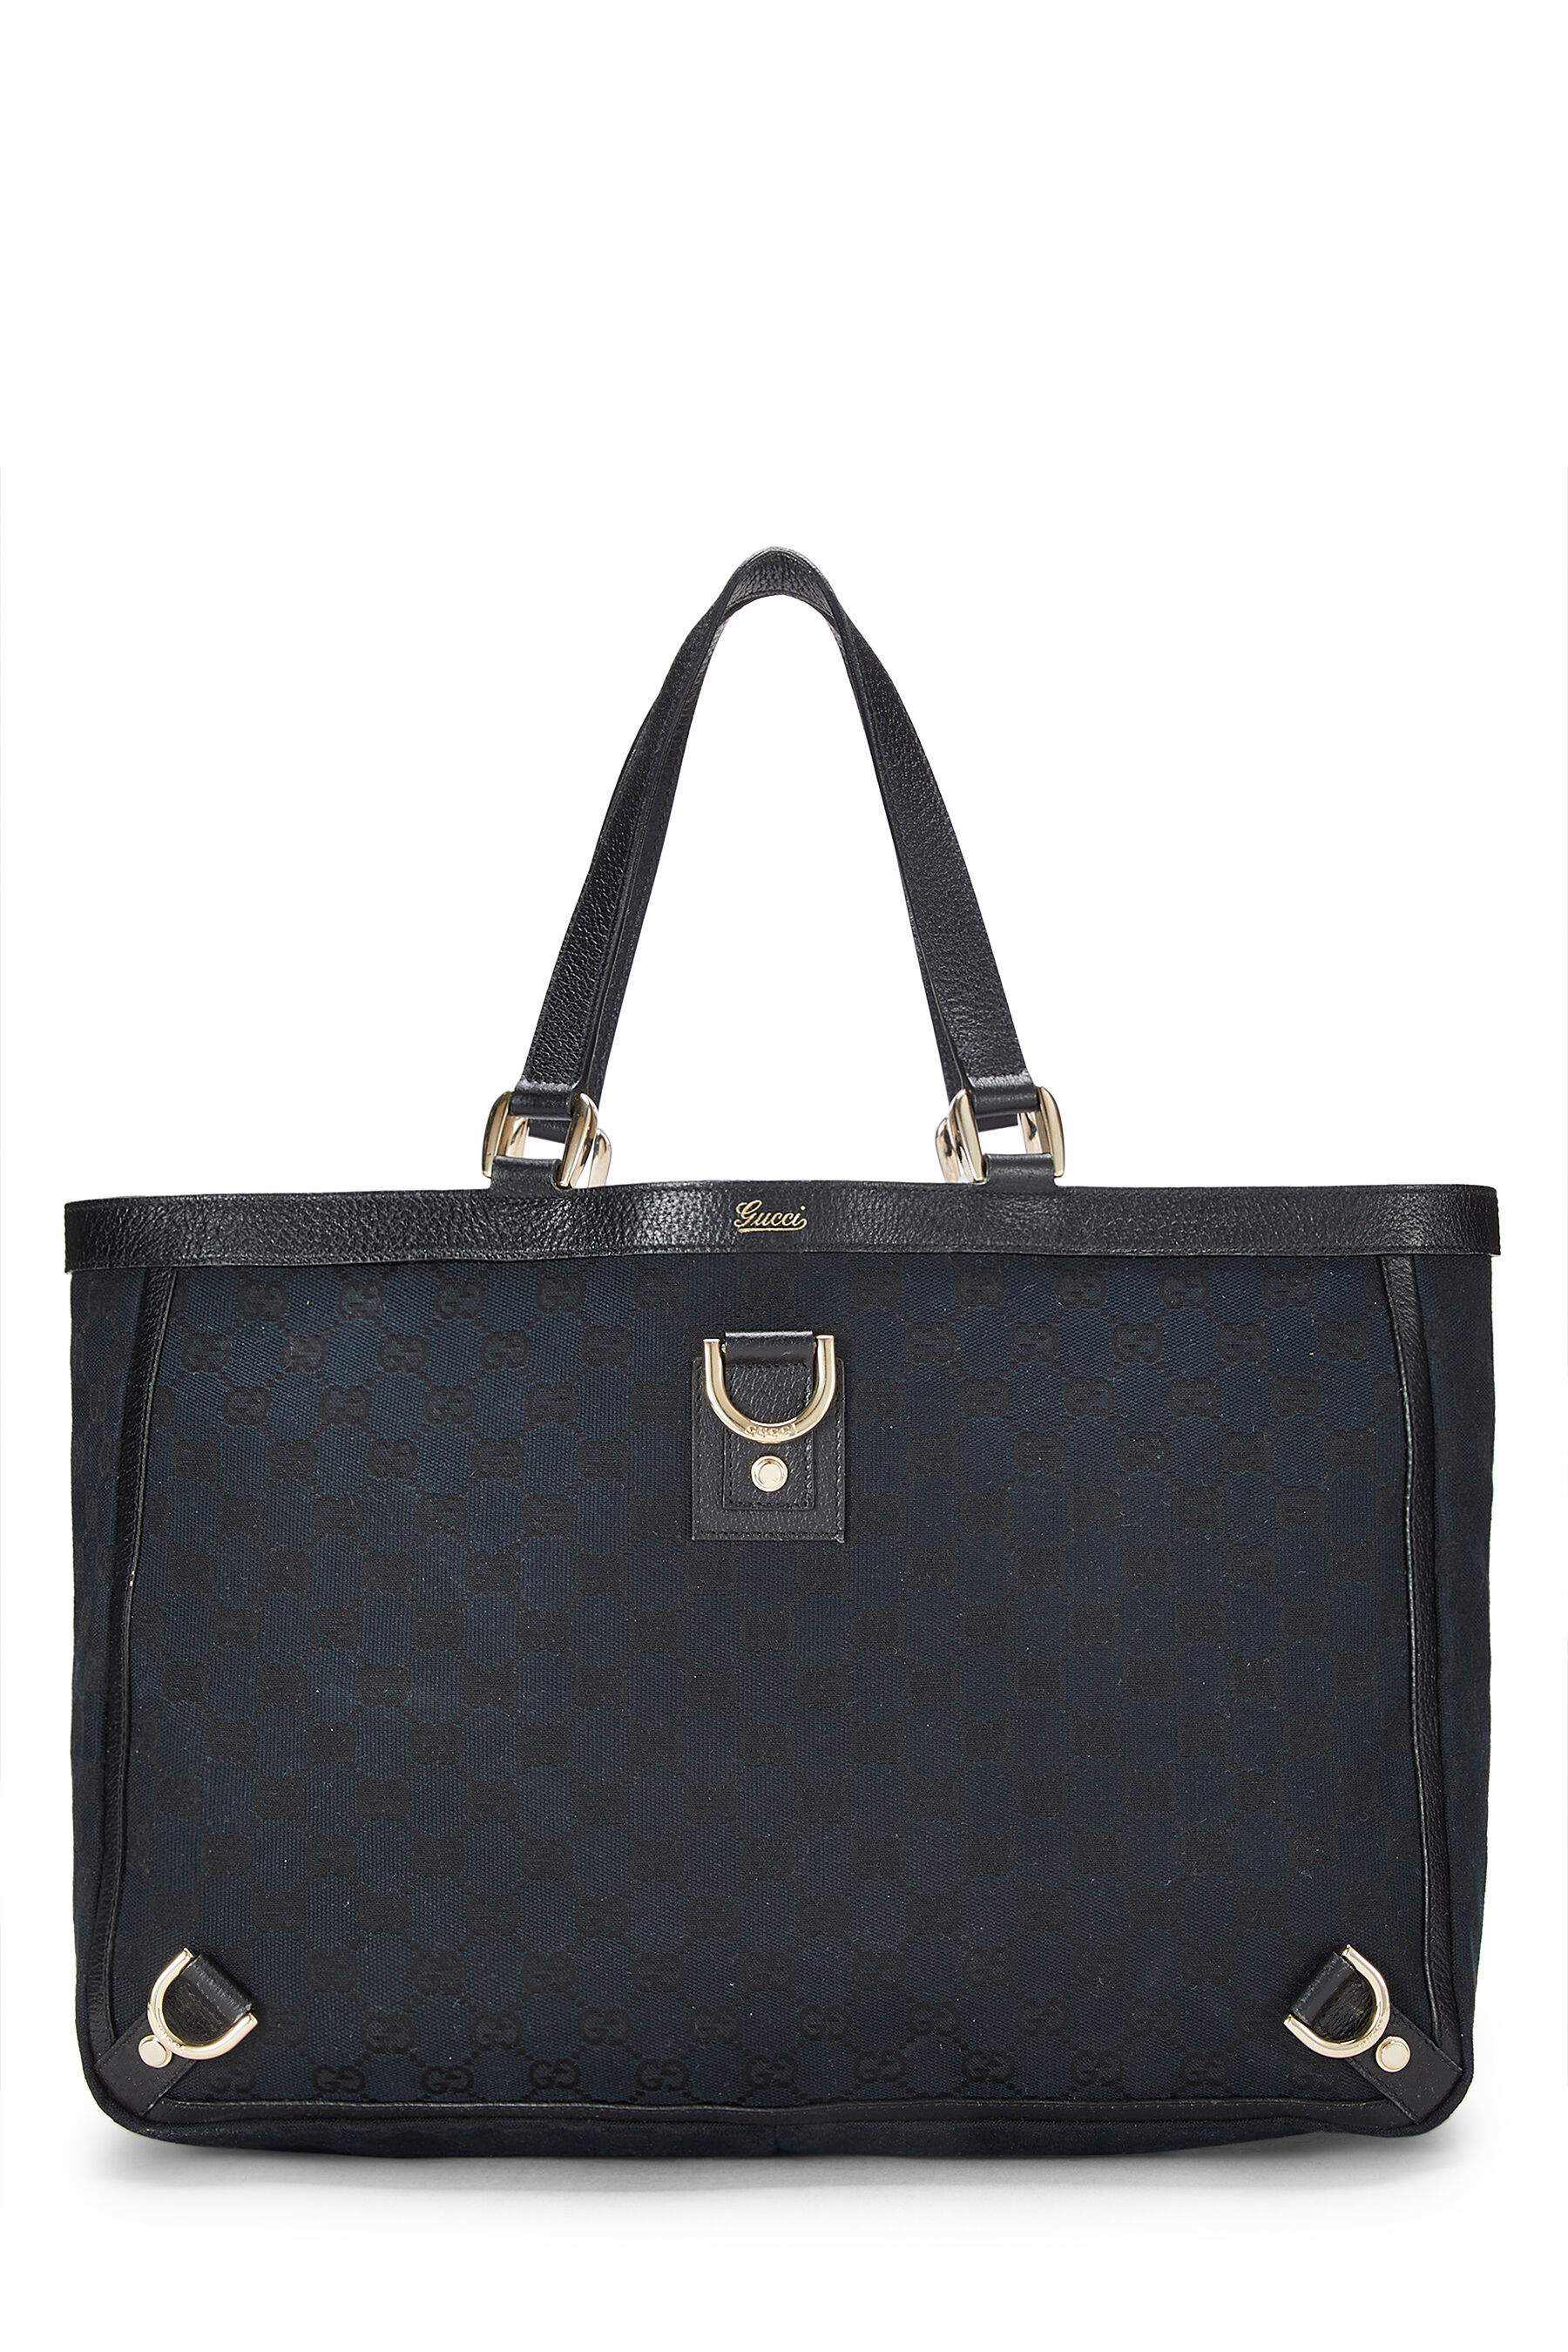 Gucci Abbey D-Ring Tote Bag Black GG Canvas | Black tote bag, Gucci tote bag,  Gucci models